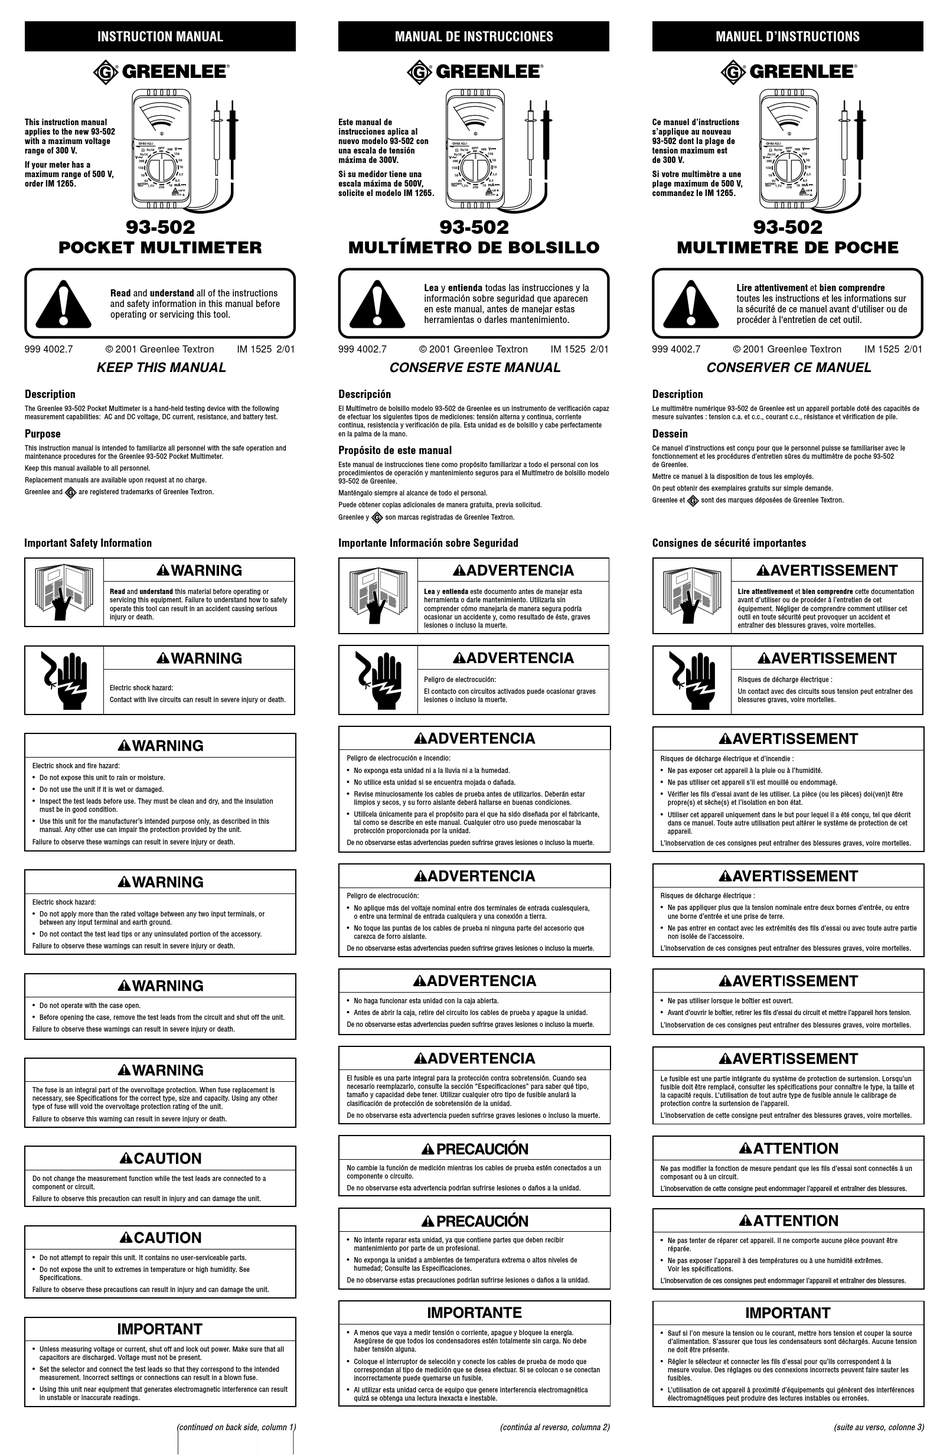 GREENLEE 93-502 MULTIMETER INSTRUCTION MANUAL | ManualsLib